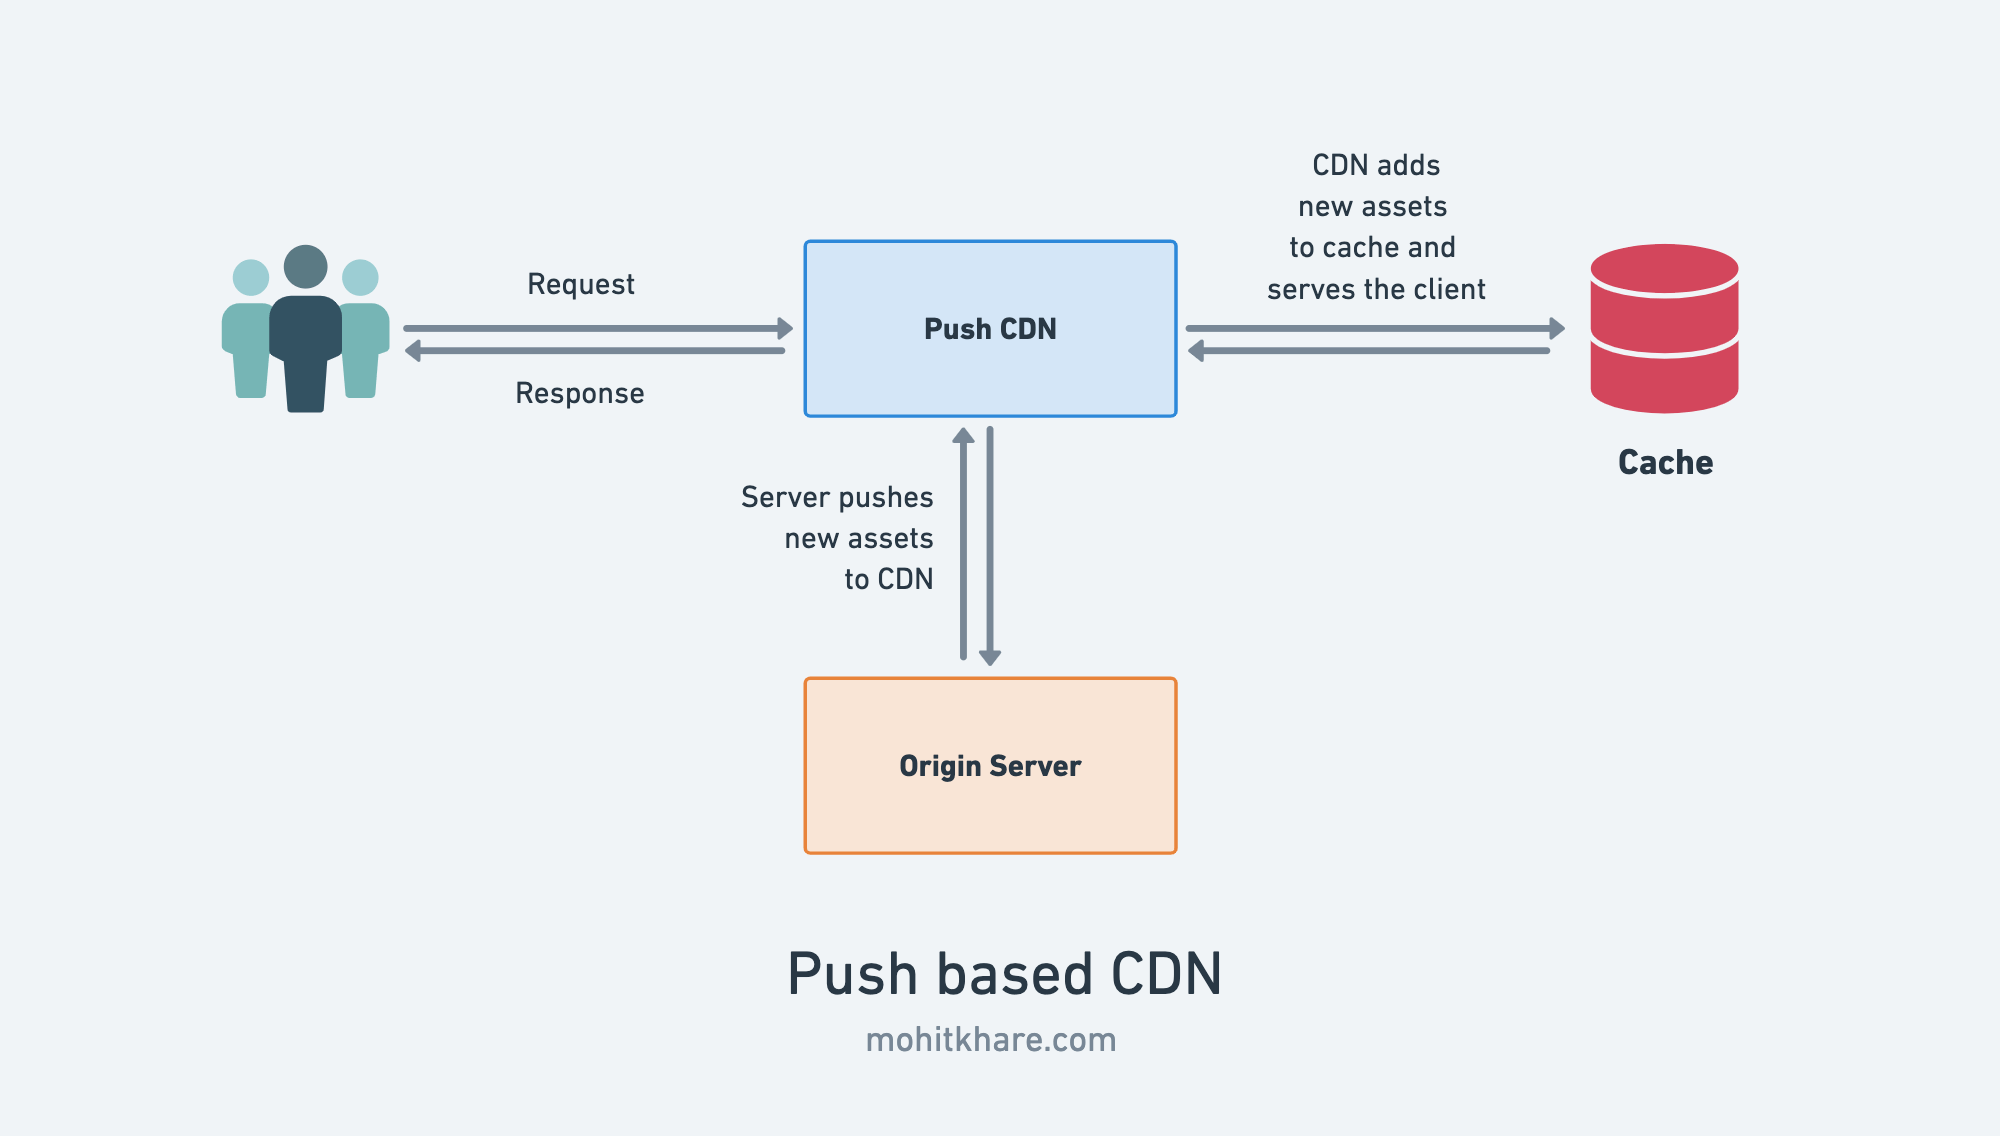 Push based CDN